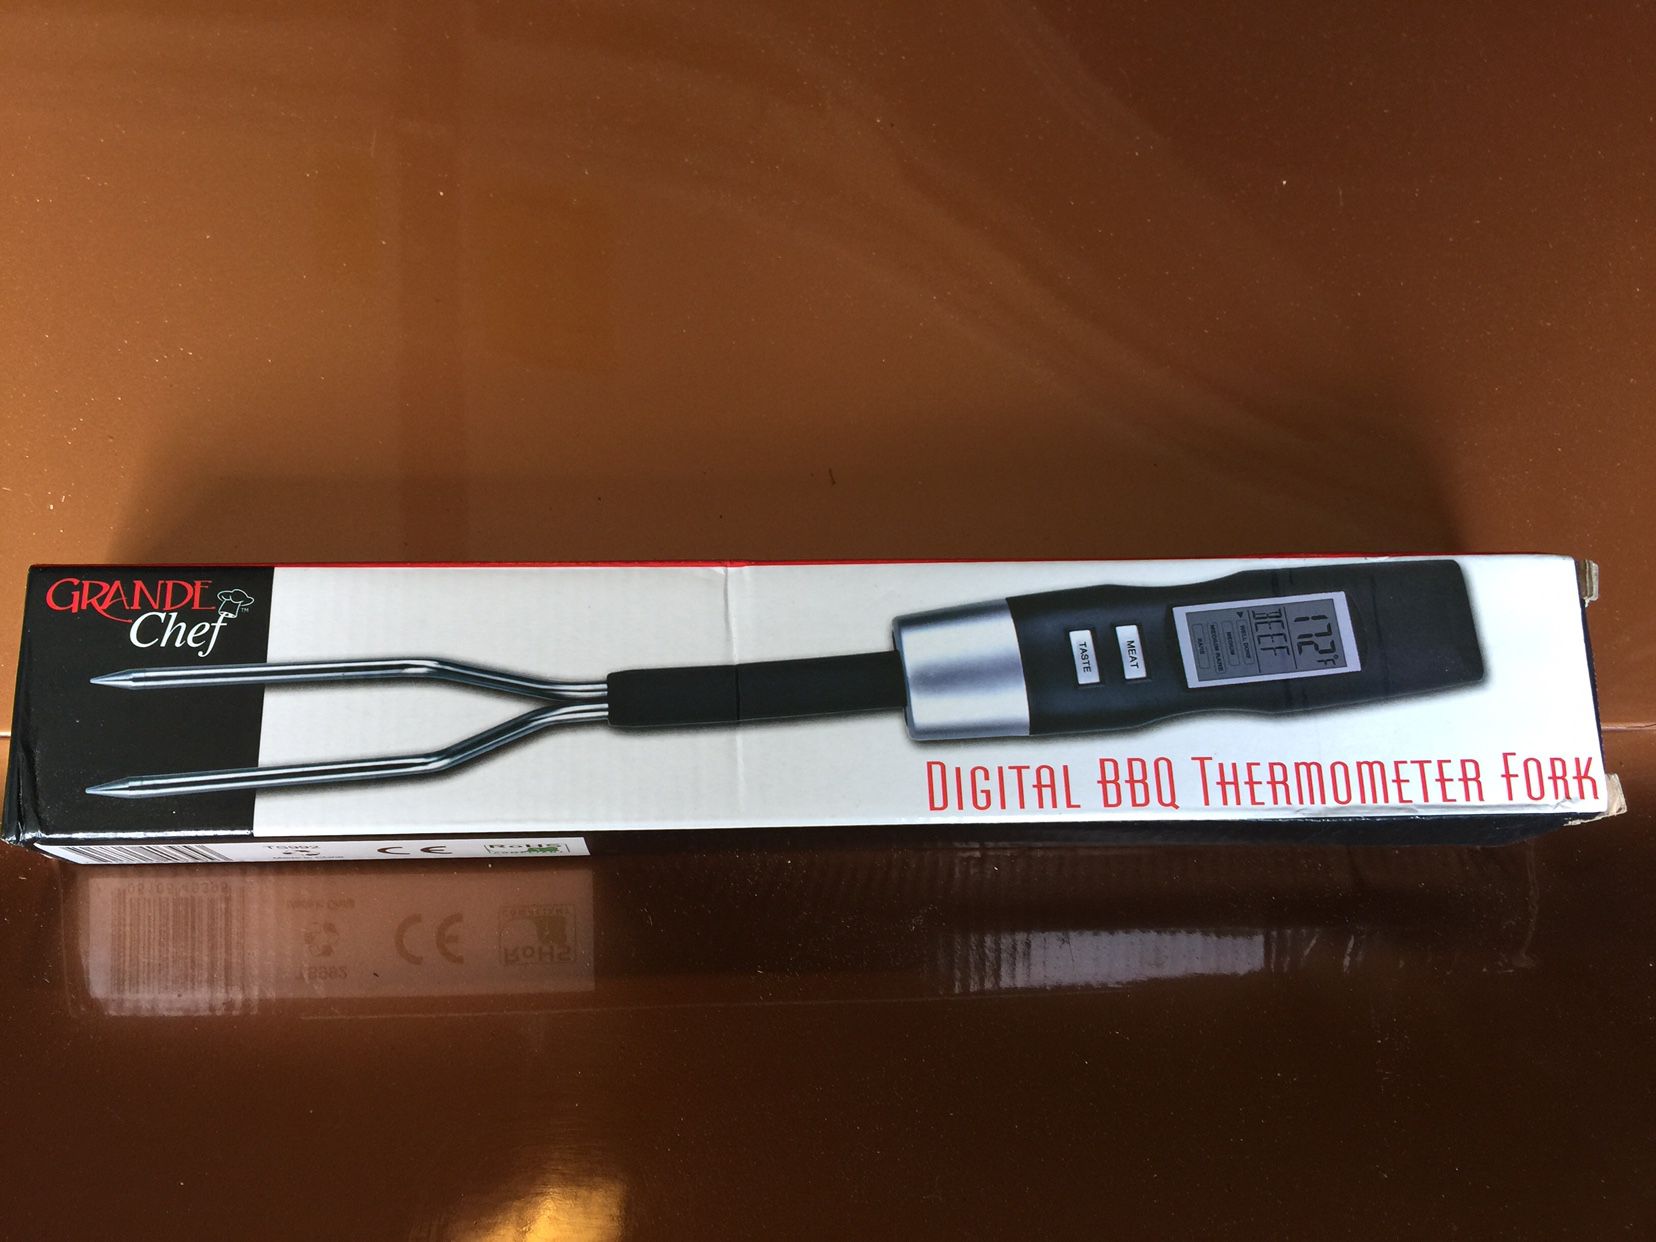 Grande Chef Digital Bbq Thermometer Fork